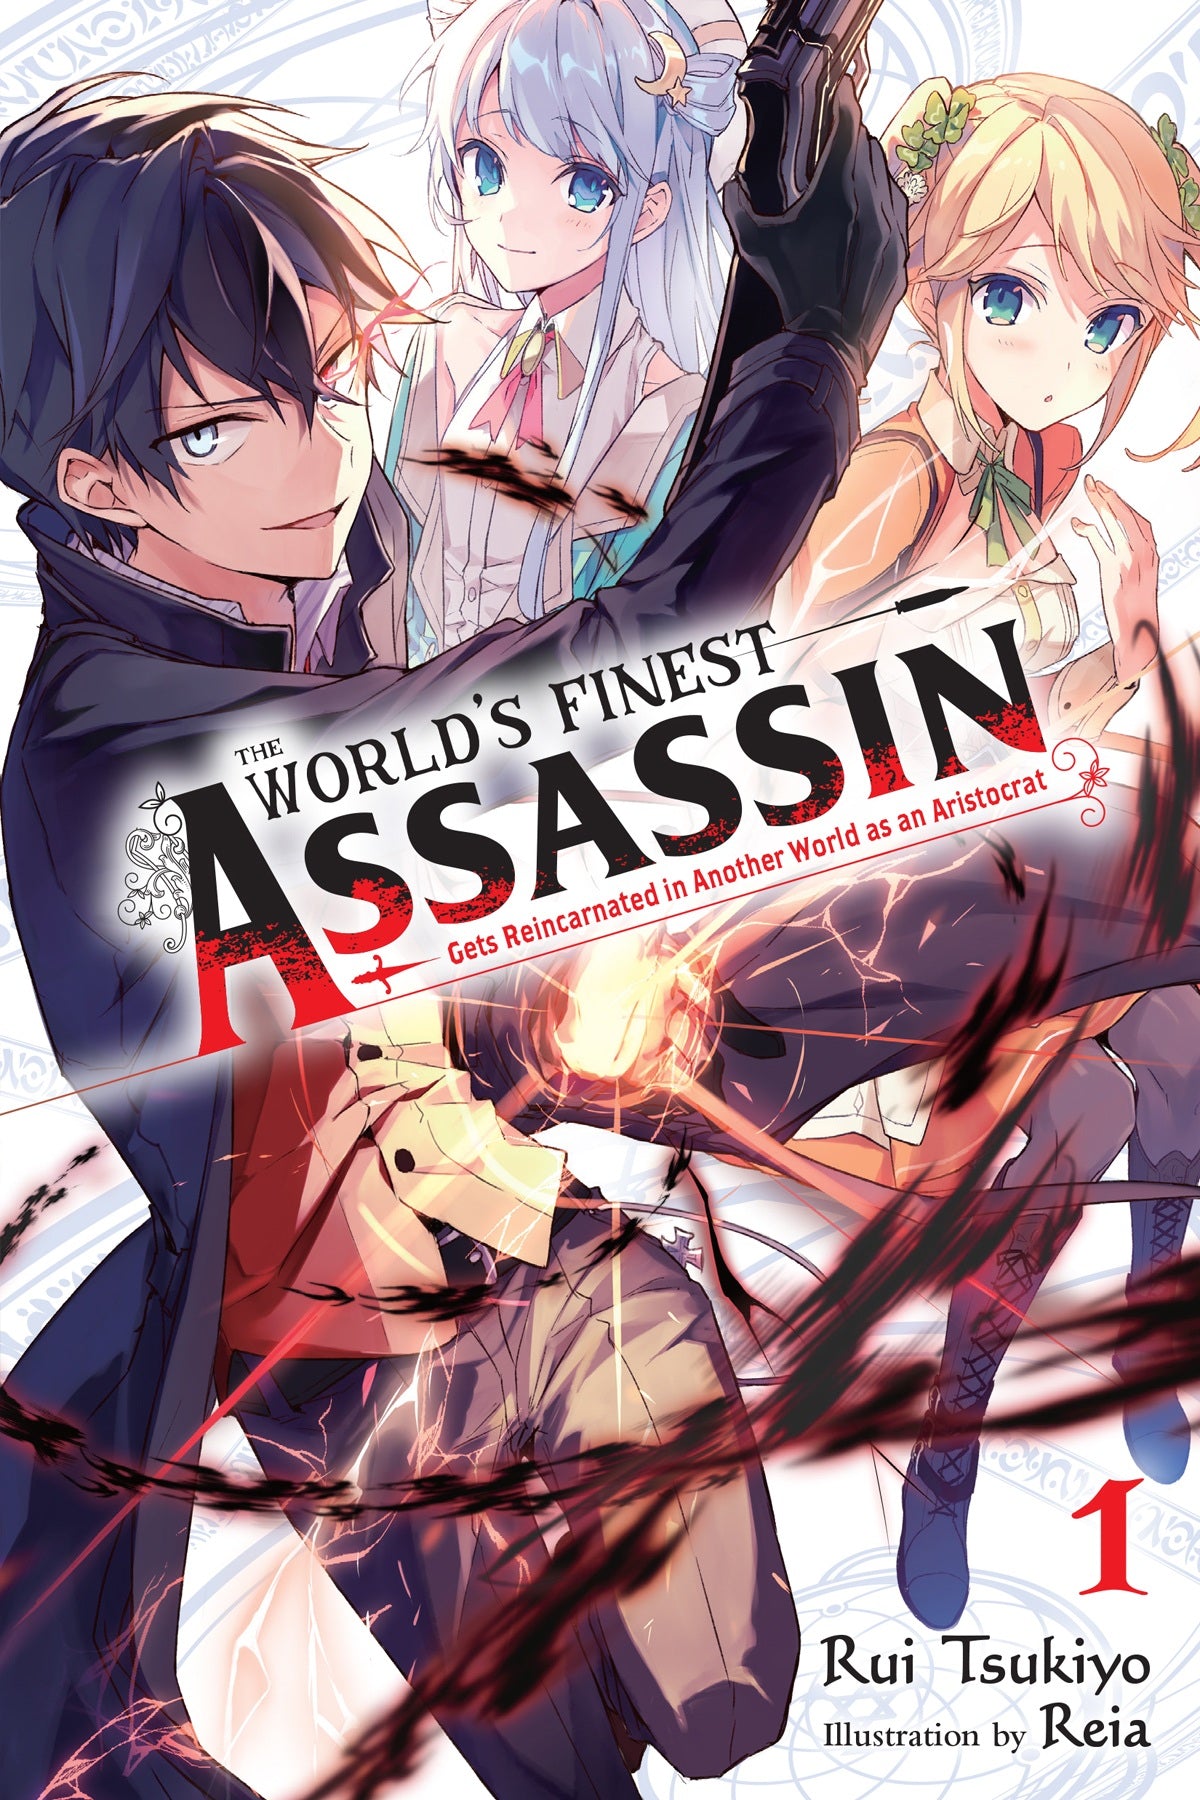 The World's Finest Assassin Gets Reincarnated in Another World as an Aristocrat Vol. 01 (Light Novel)